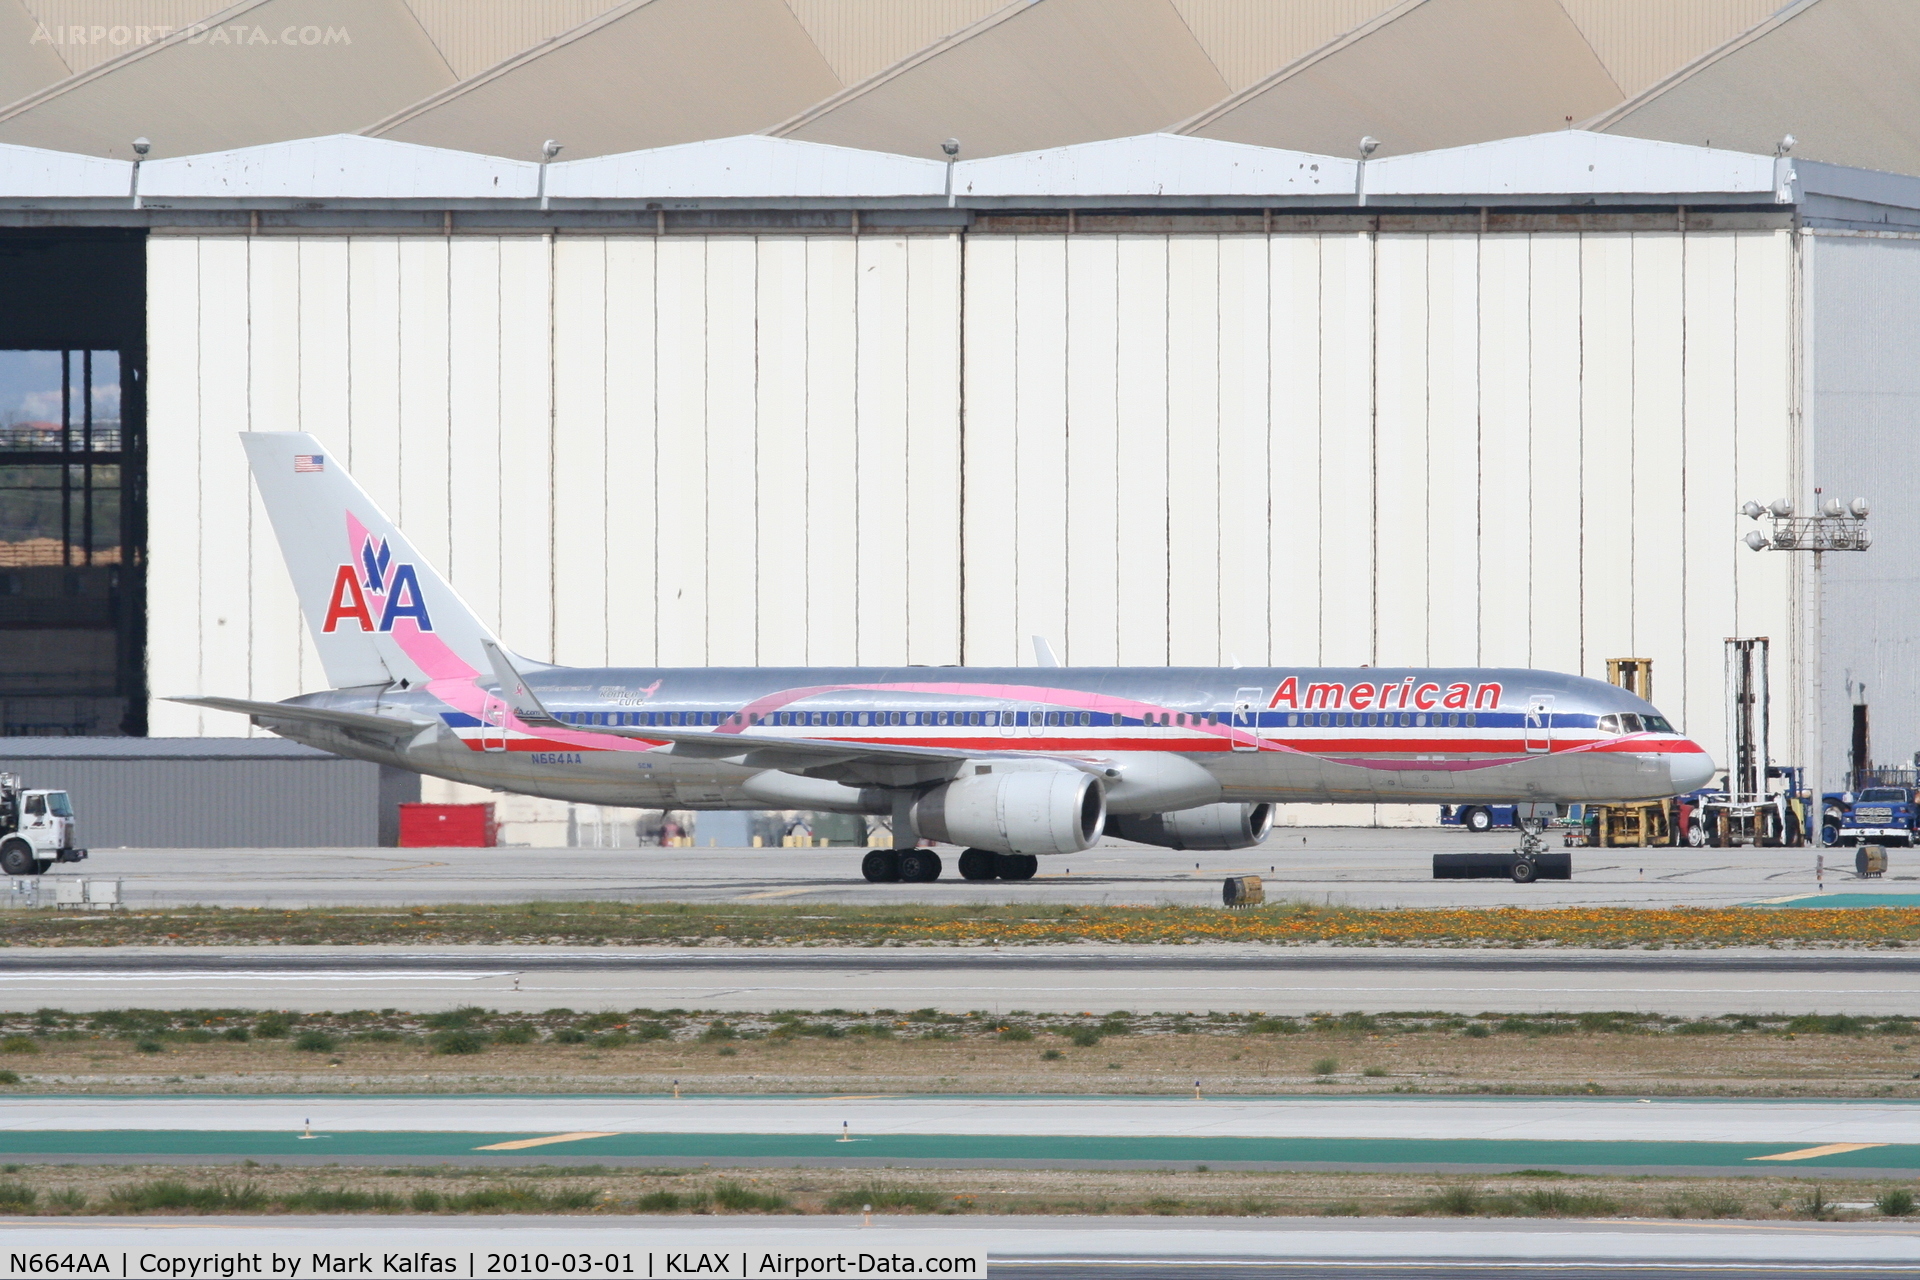 N664AA, 1992 Boeing 757-223 C/N 25298, American Airlines Boeing 757-223. N664AA, AAL581 arriving from KSTL waiting for it's gate at the AA maintenance hanger.